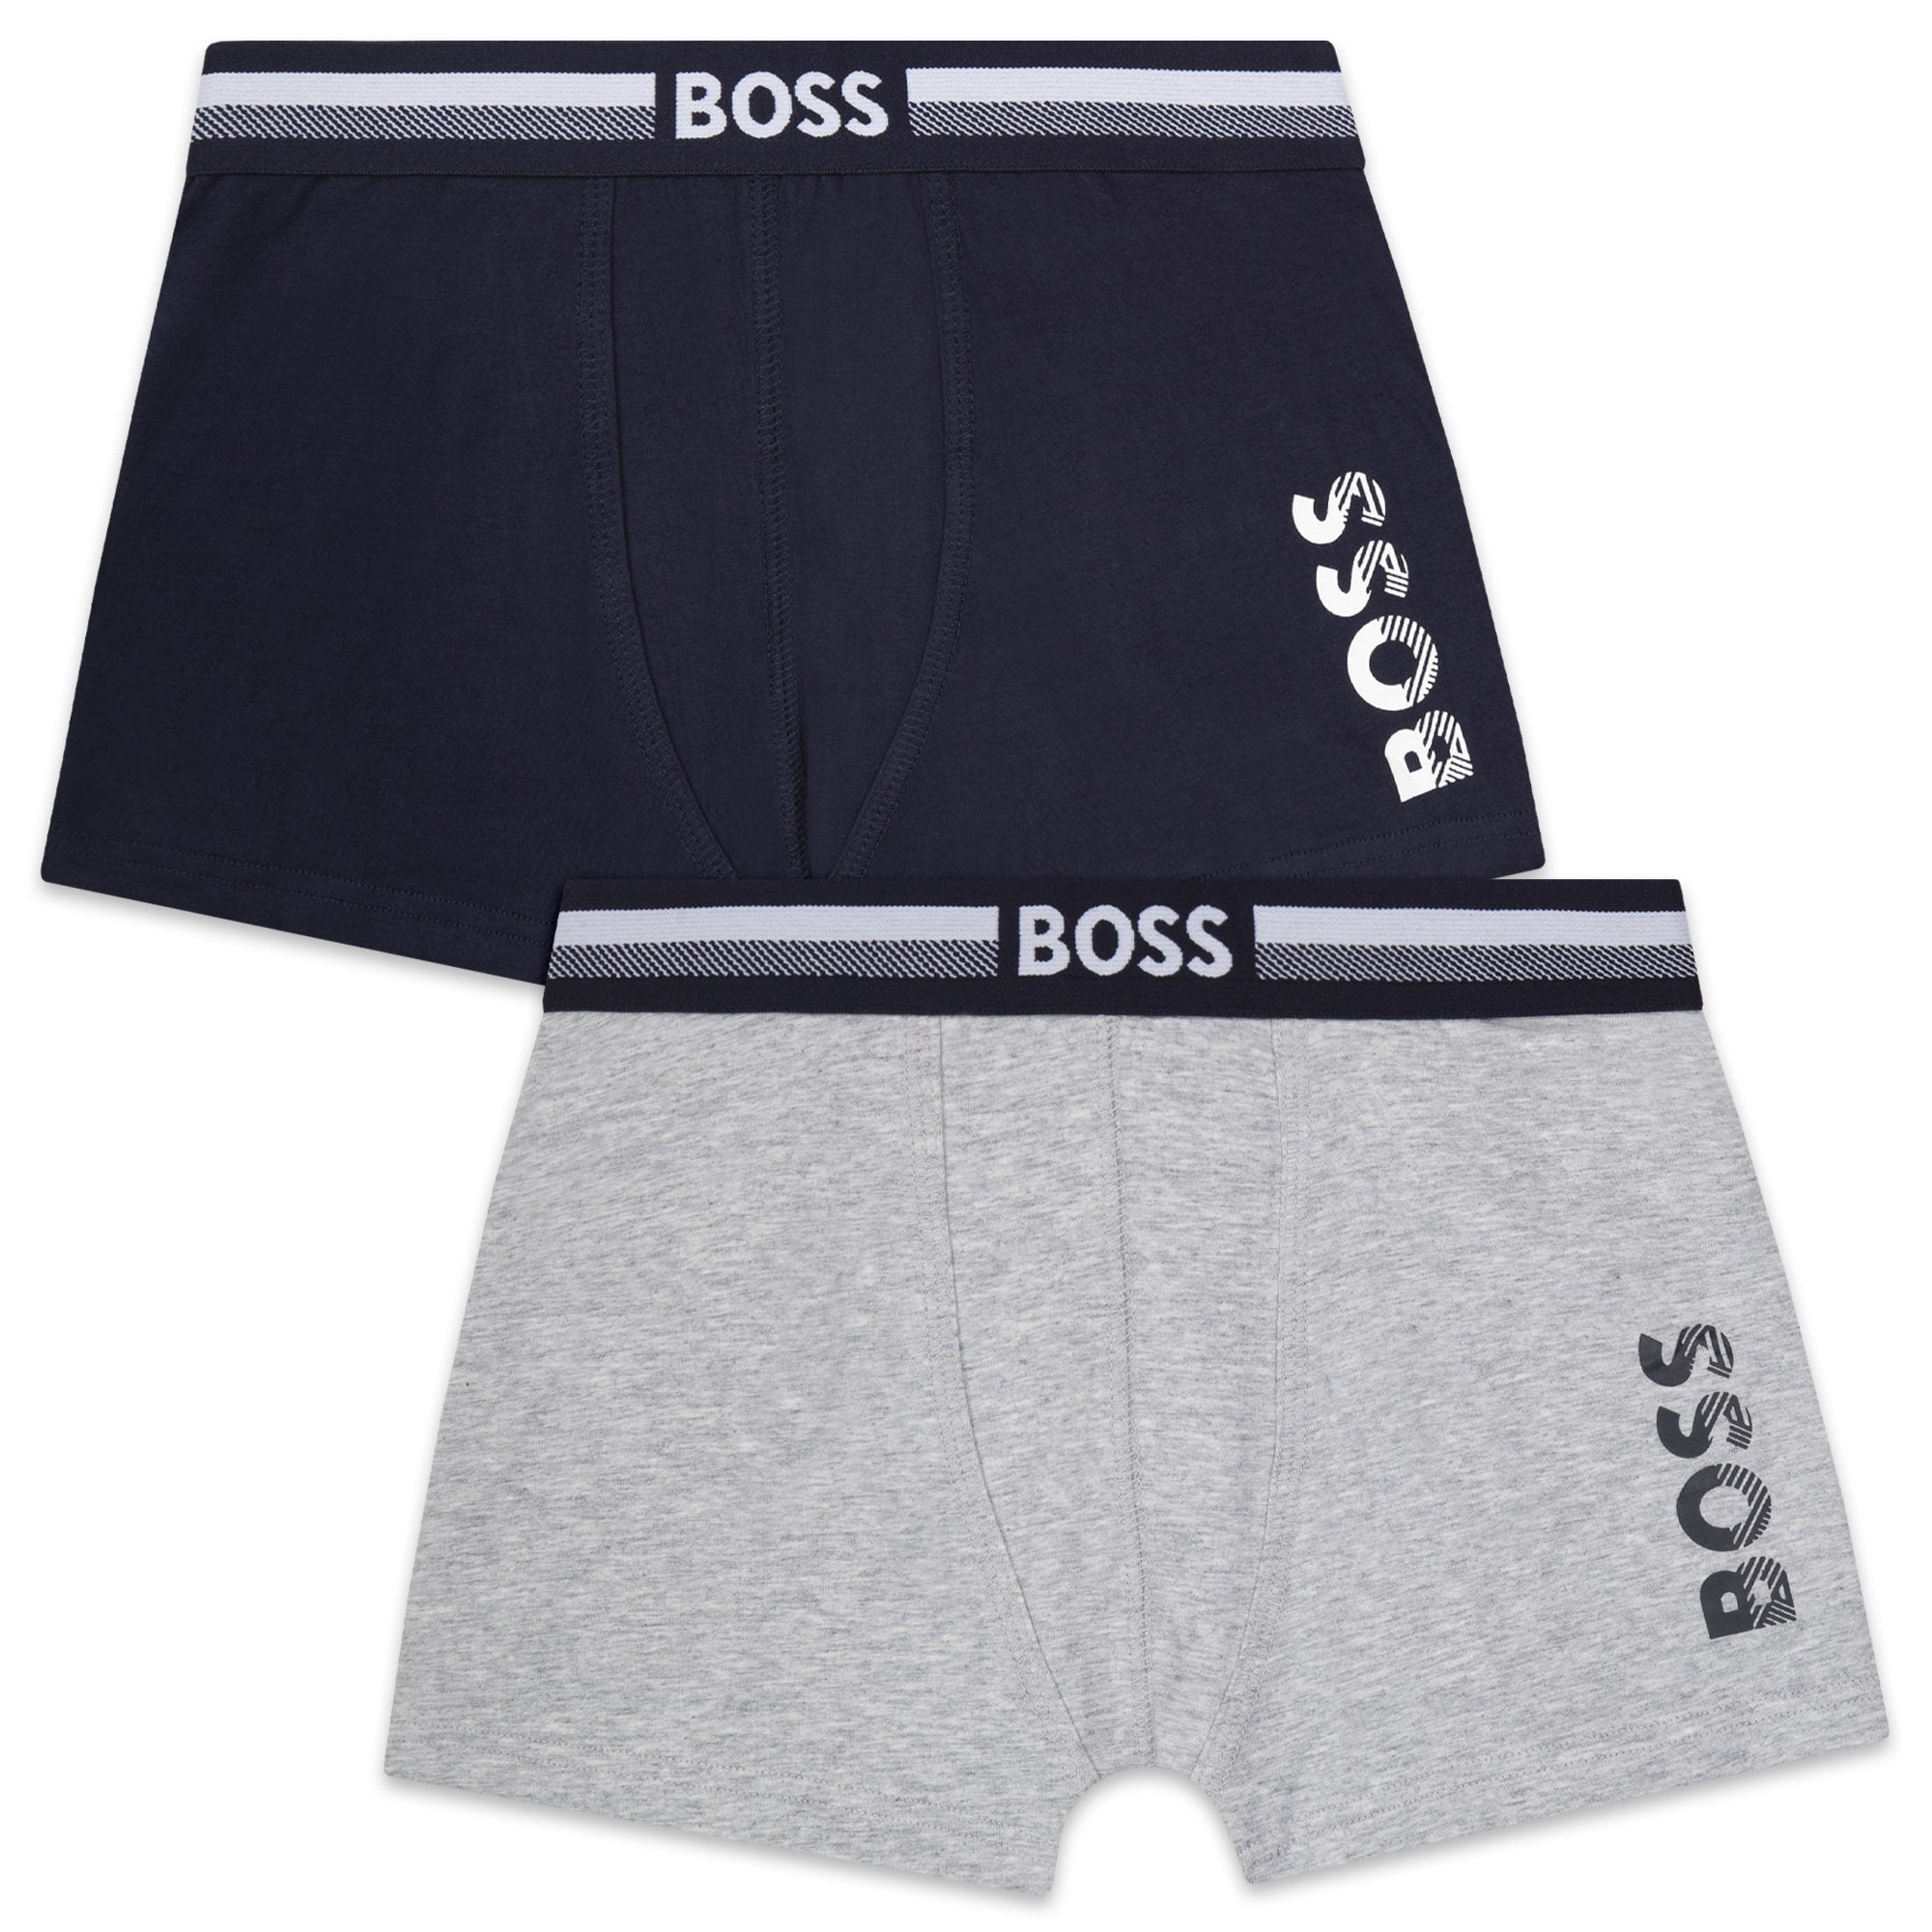 BOSS Set Of 2 Boxer Shorts - Navy